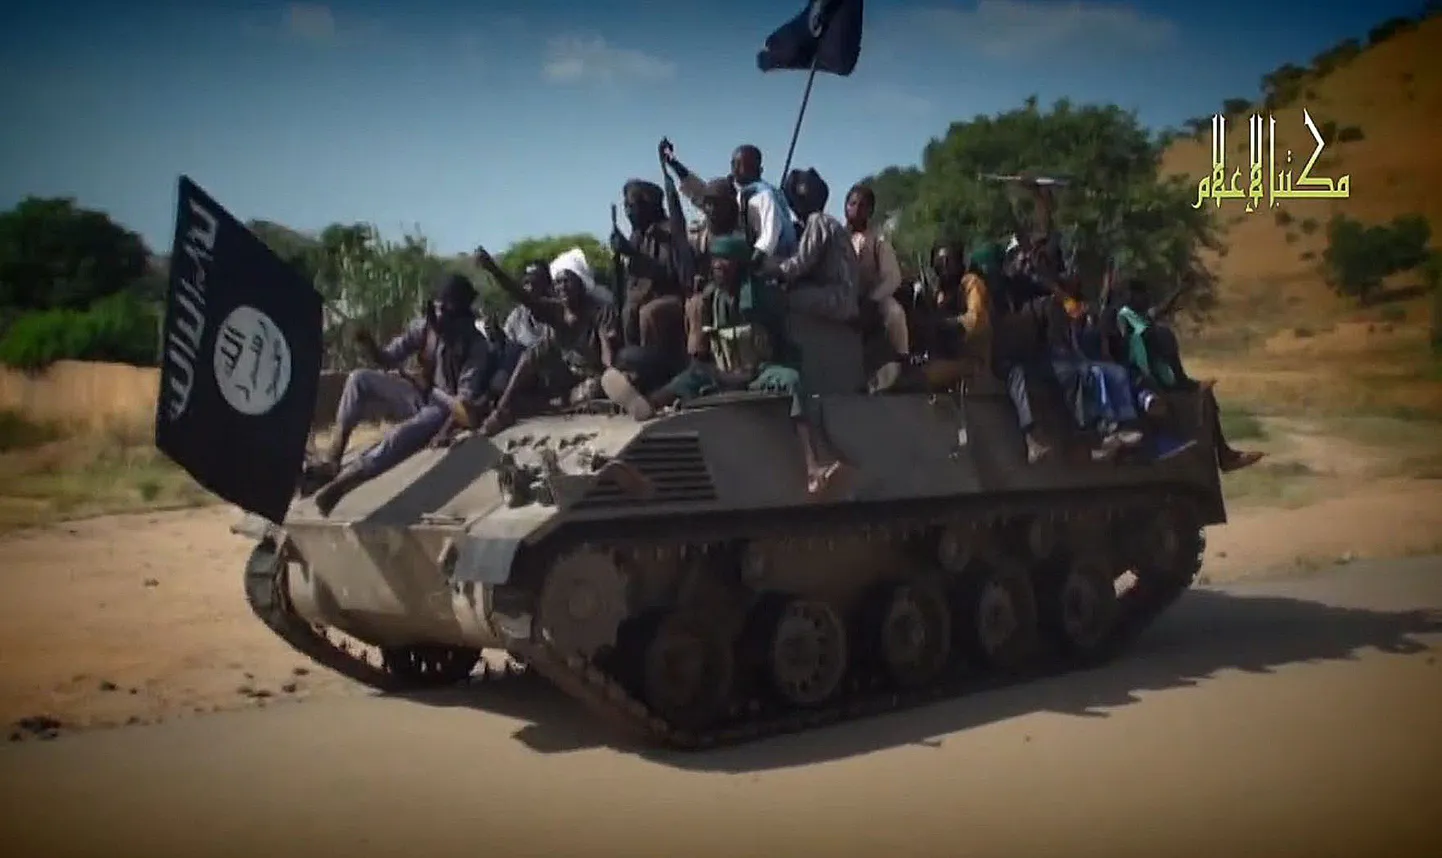 Boko Harami terrorirühmituse liikmed